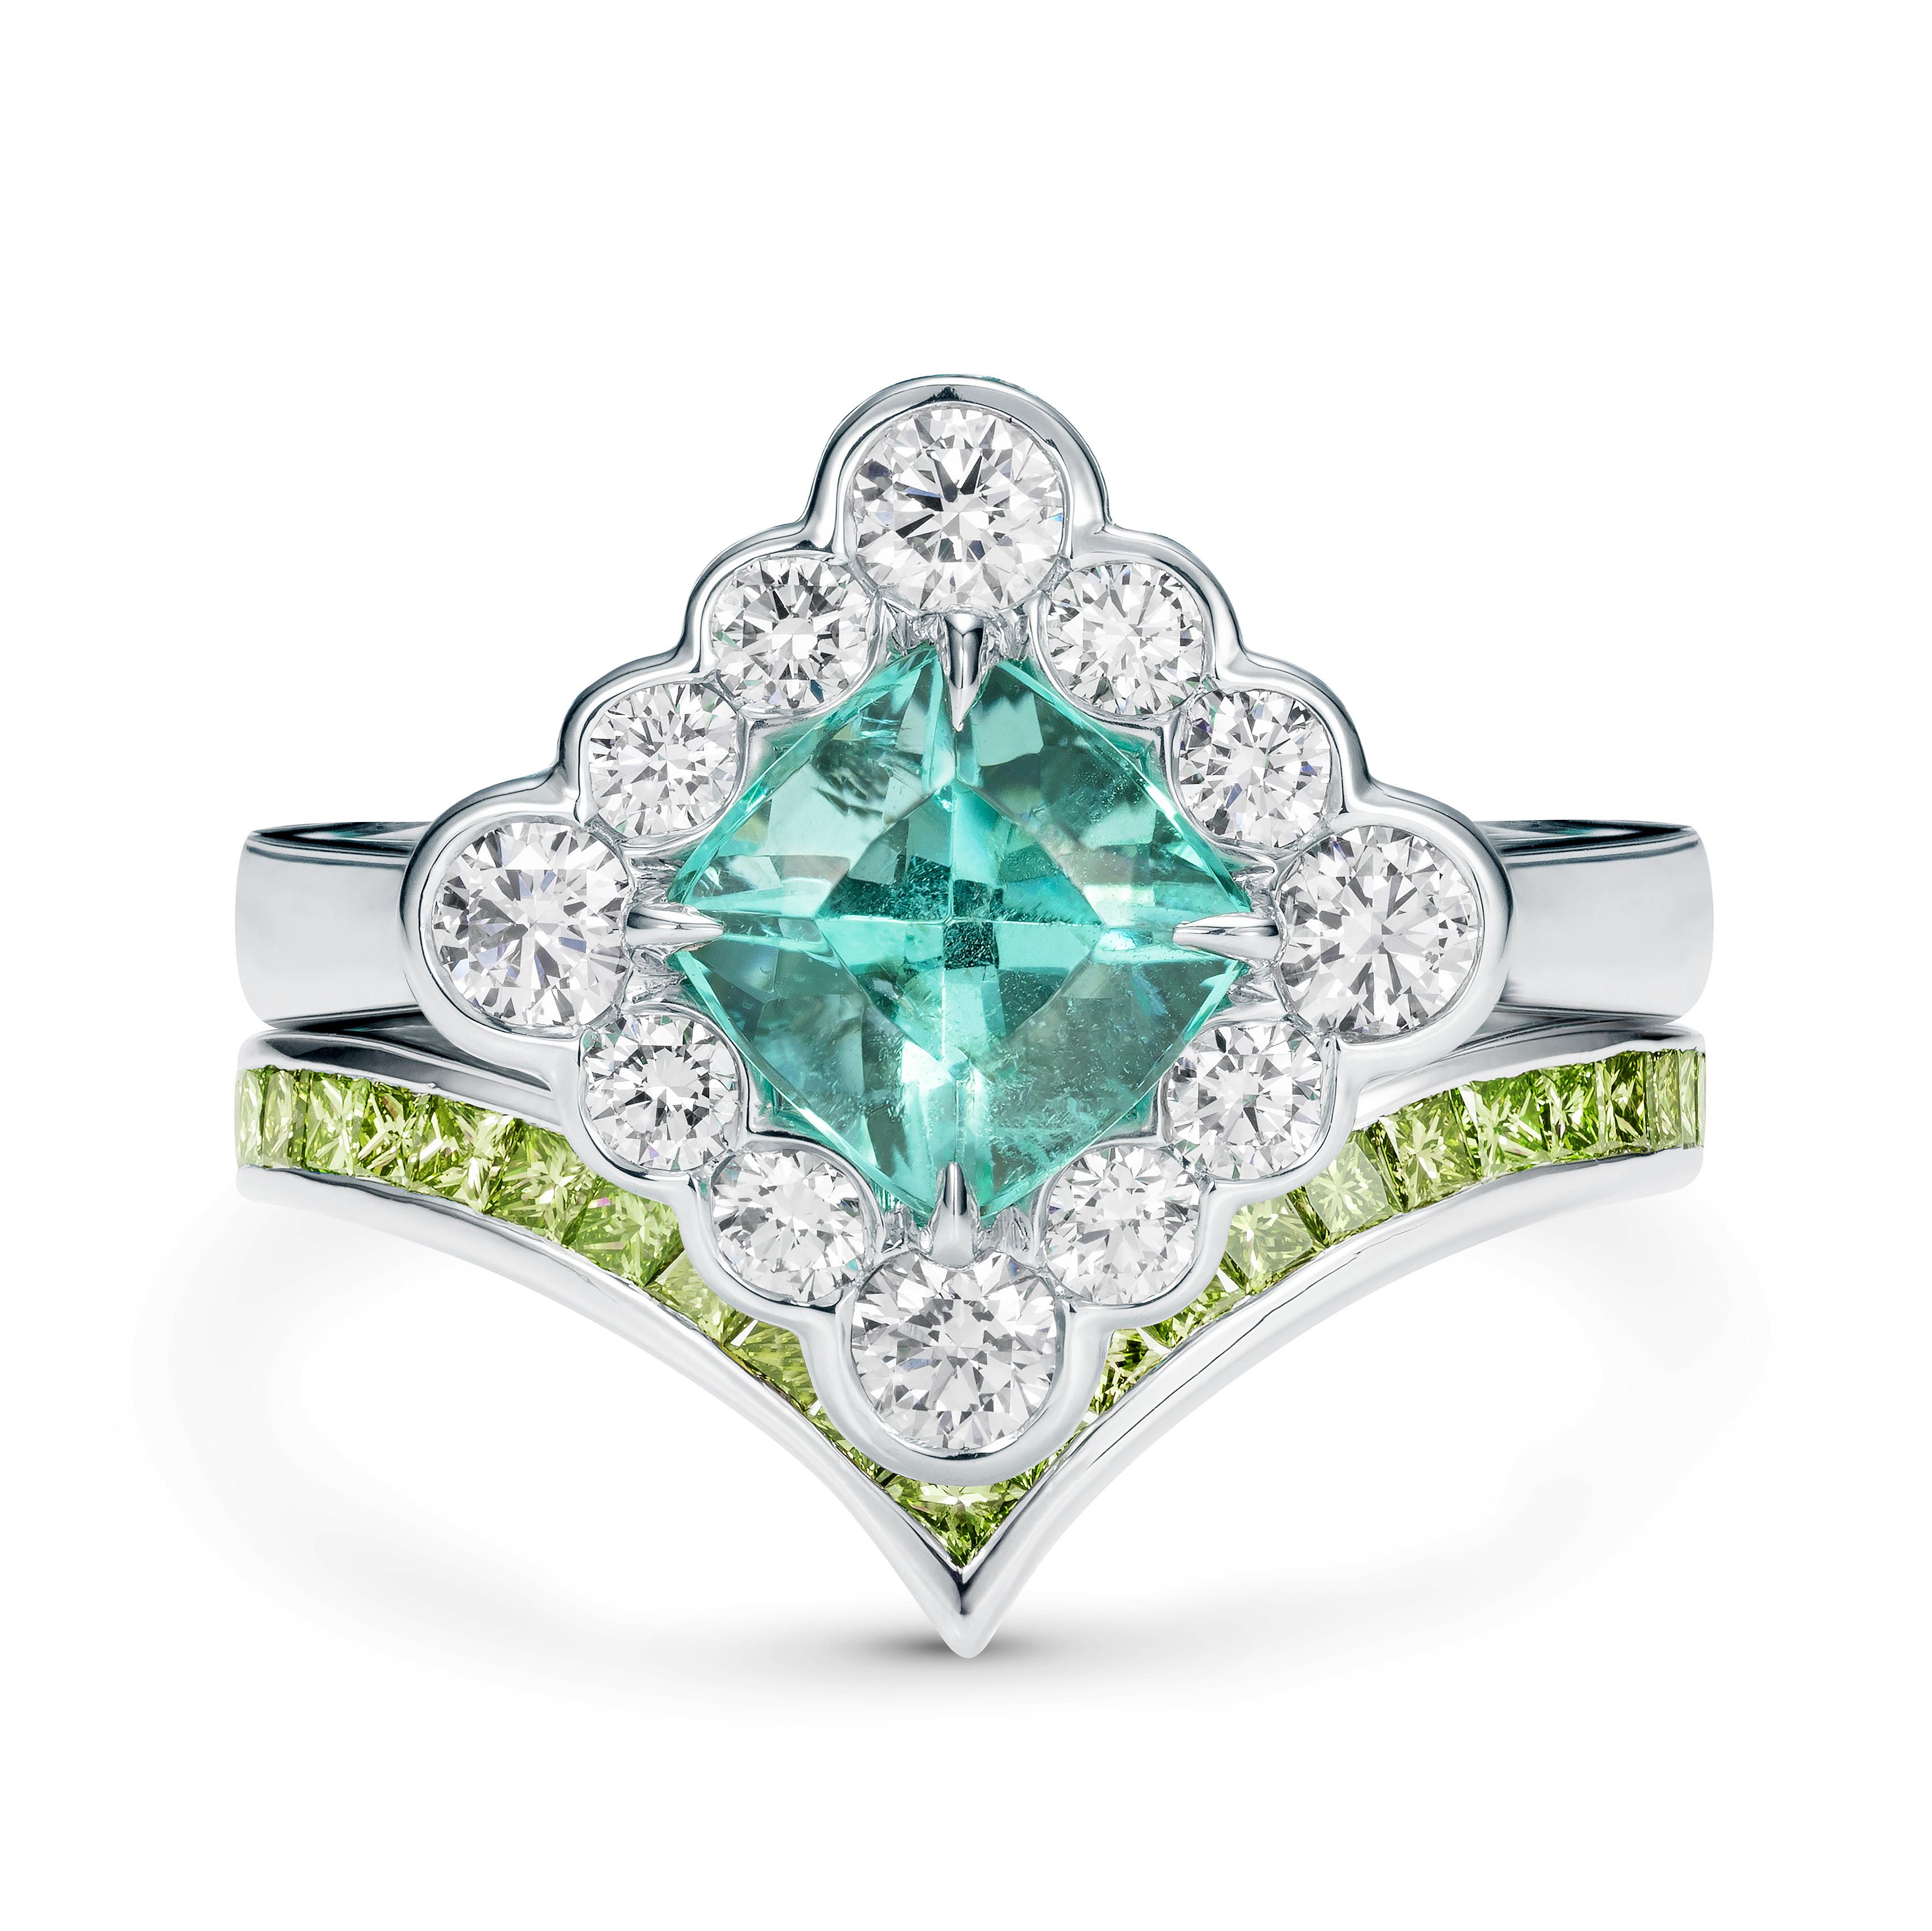 Marcel Salloum 1.05 Carat Paraiba Tourmaline Diamond Engagement Ring in Platinum In New Condition For Sale In London, London